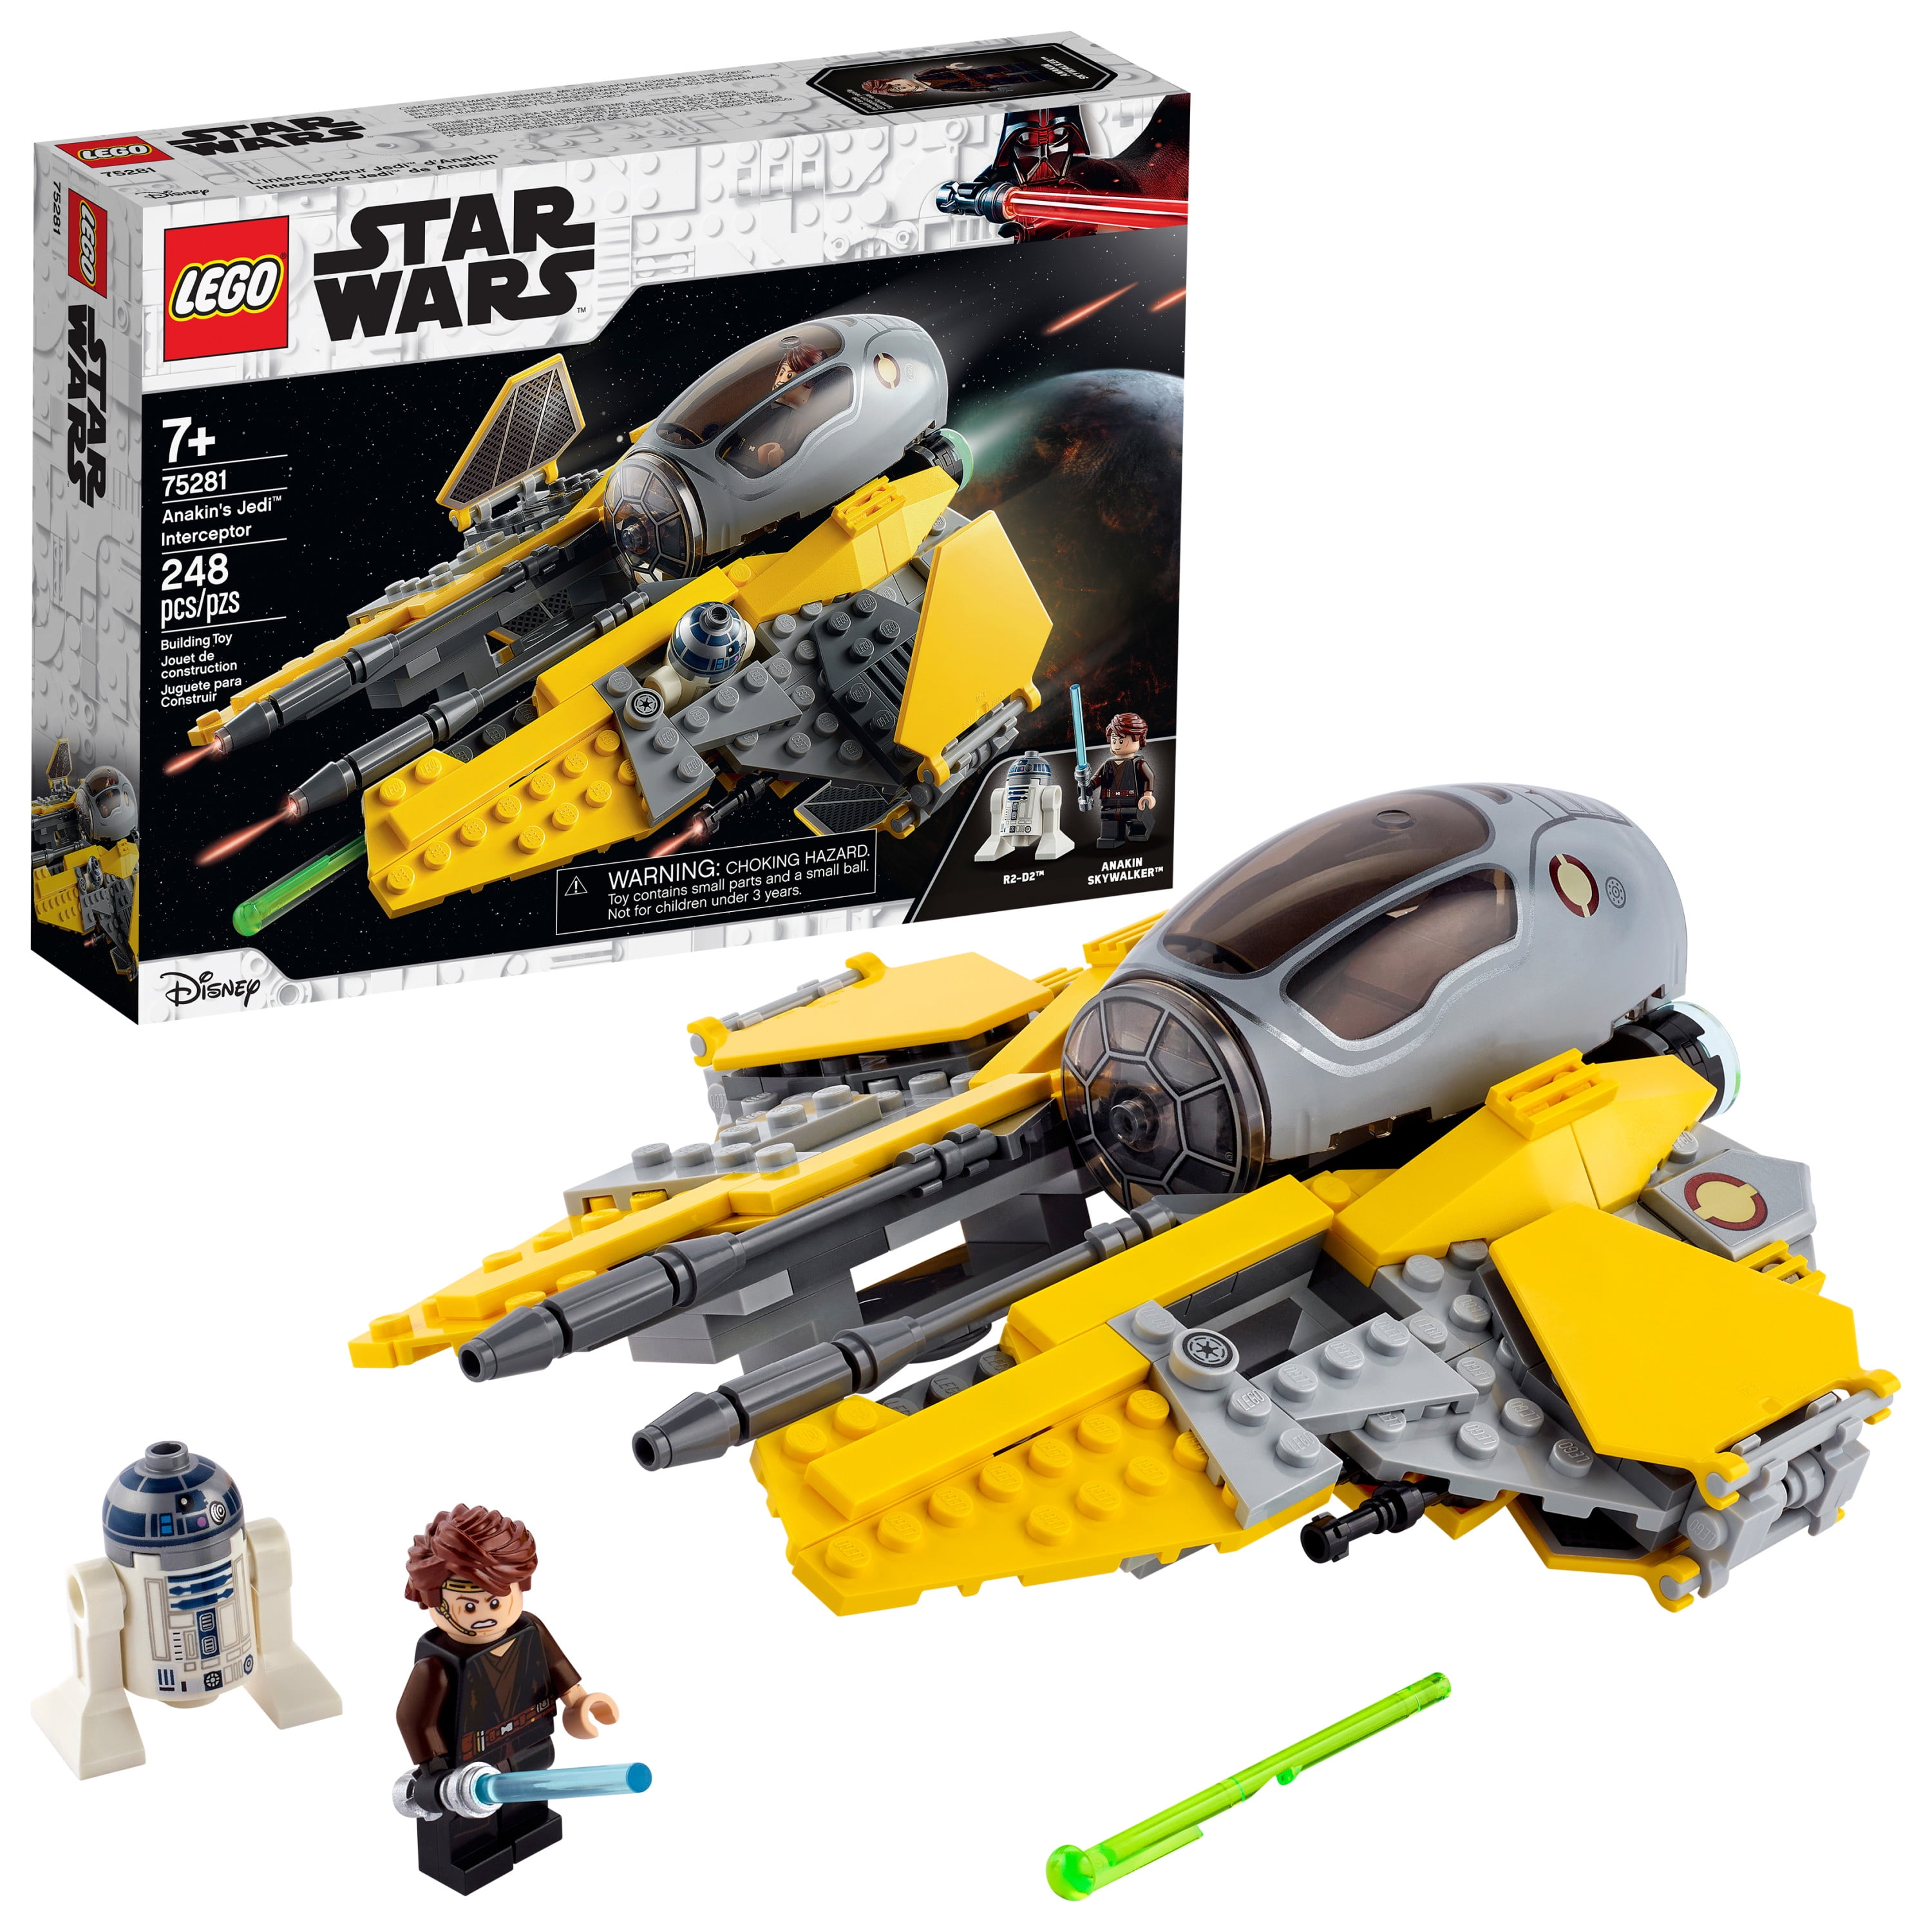 Samle lyd brutalt LEGO Star Wars: Revenge of the Sith Anakin's Jedi Interceptor 75281 Anakin  Skywalker Building Toy (248 Pieces) - Walmart.com